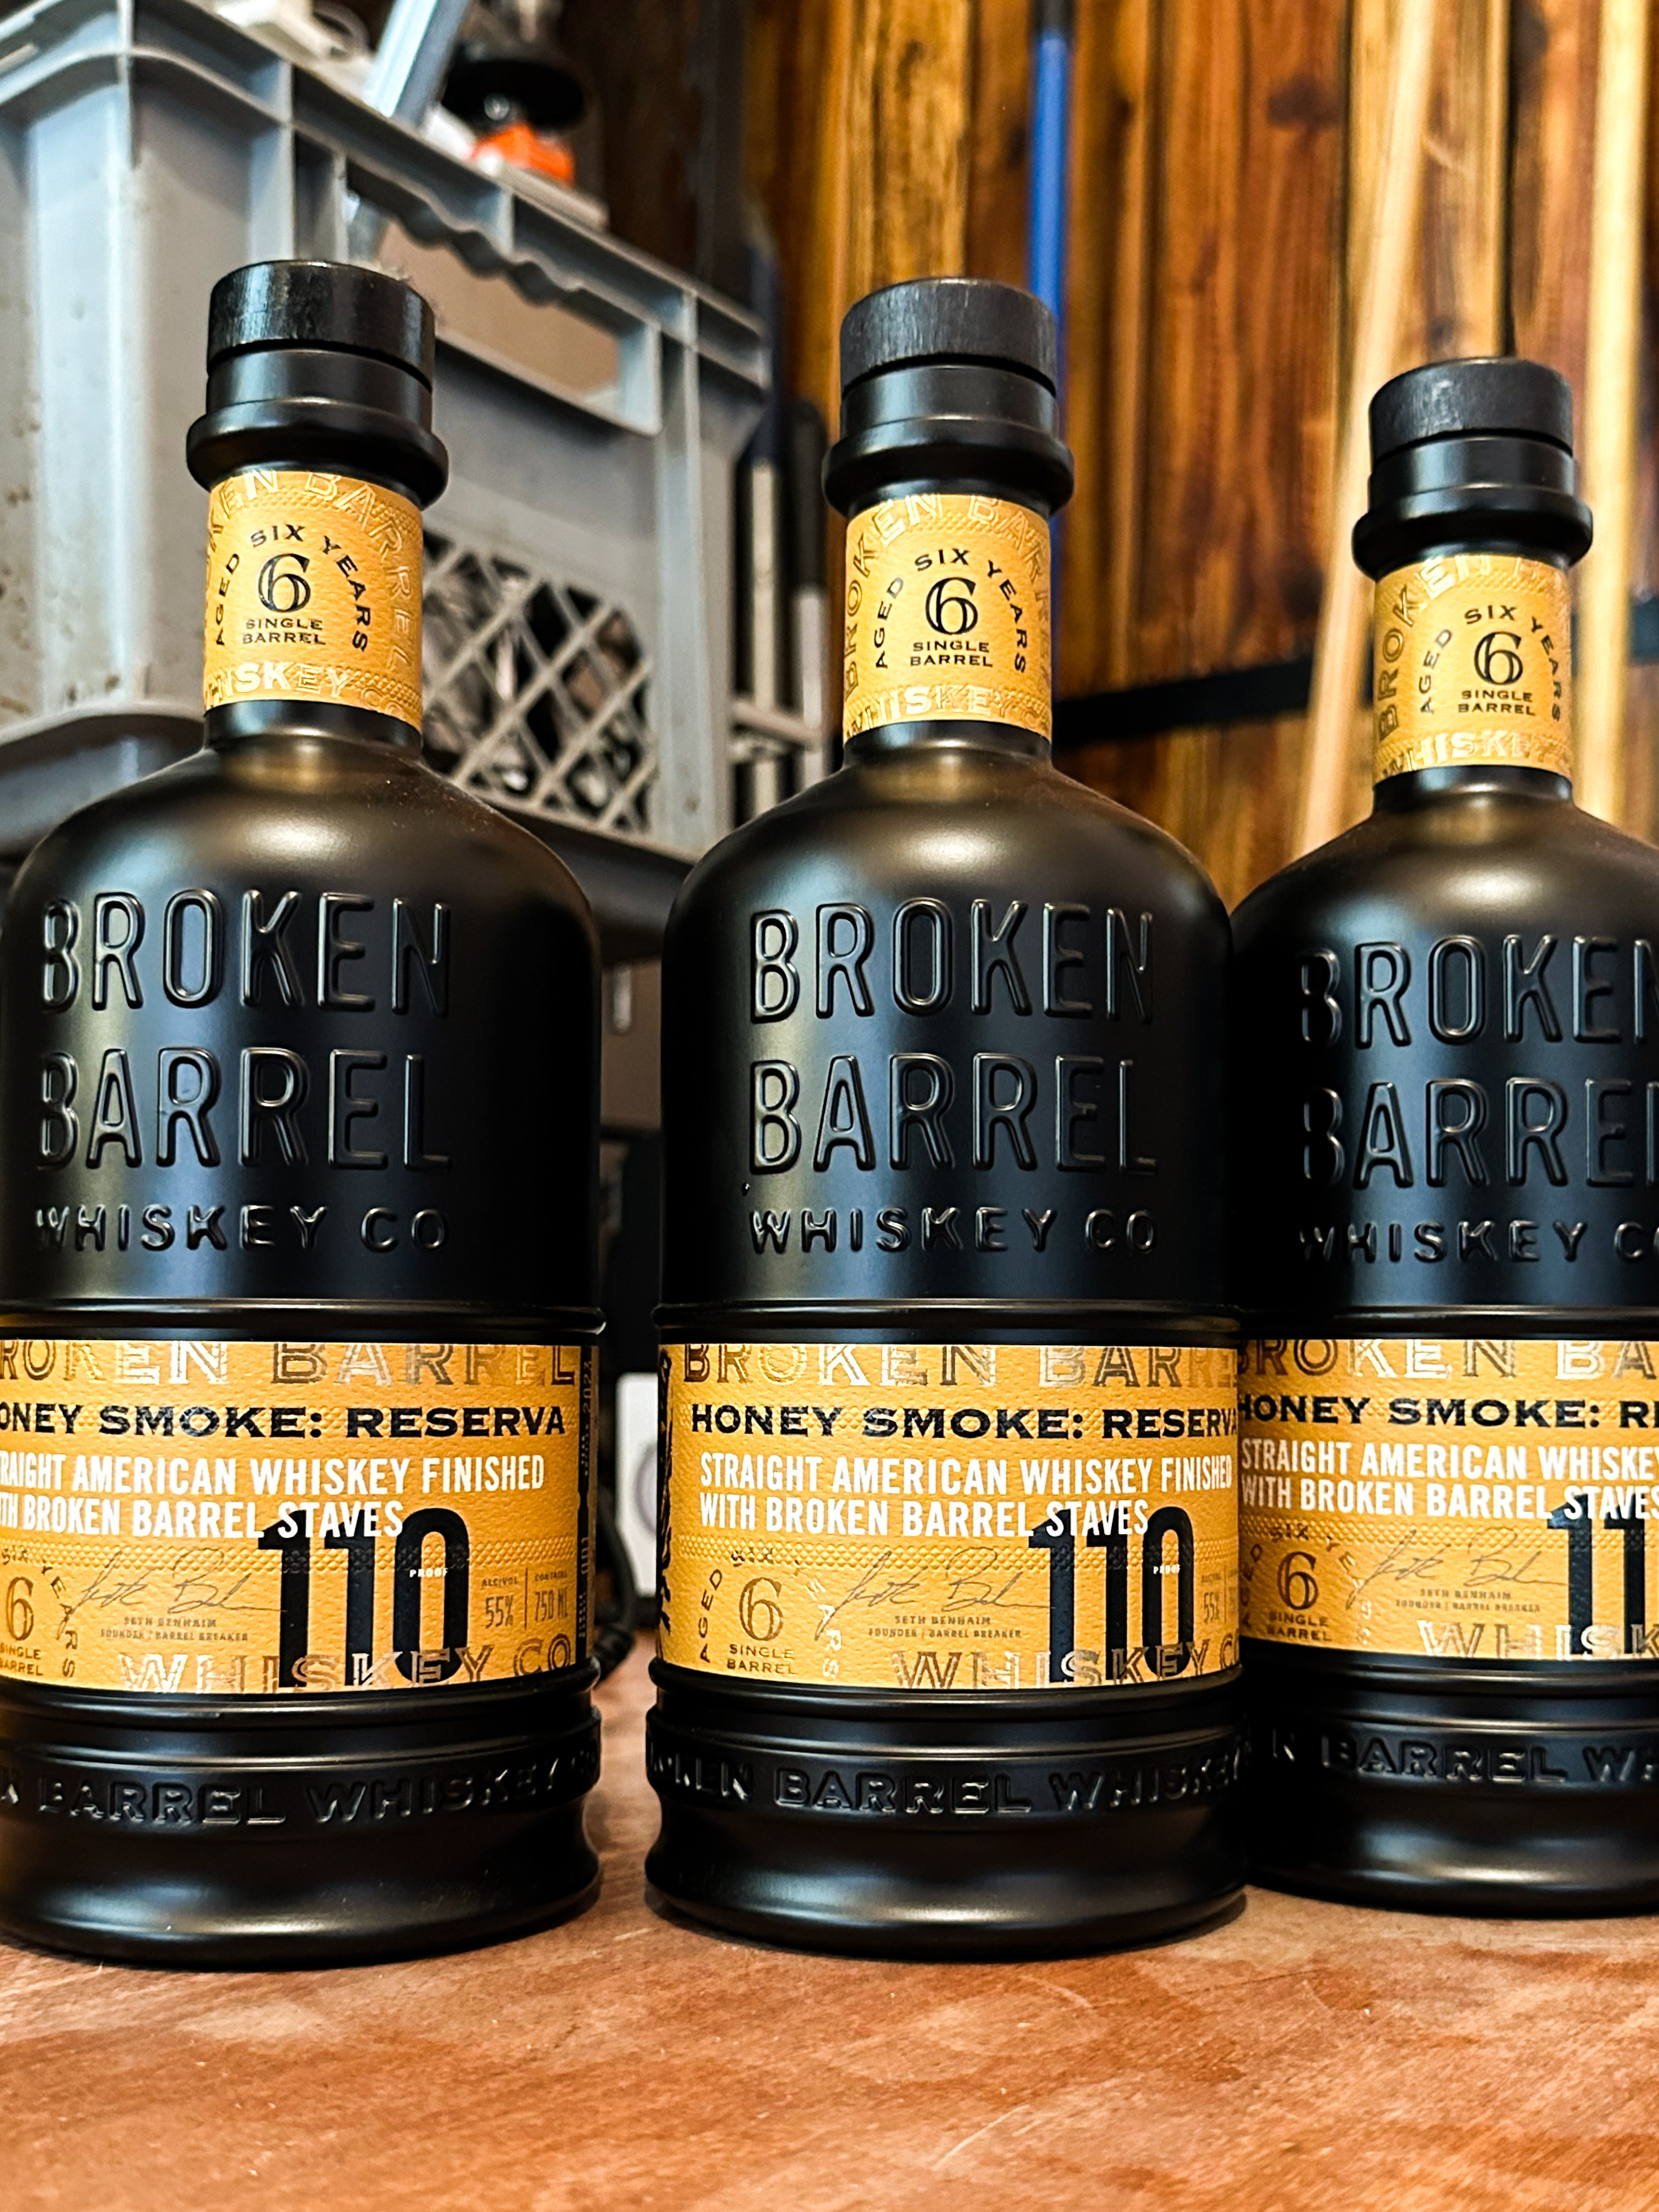 Broken Barrel Whiskey Co. Announces Unique, New Honey Smoke: Reserva